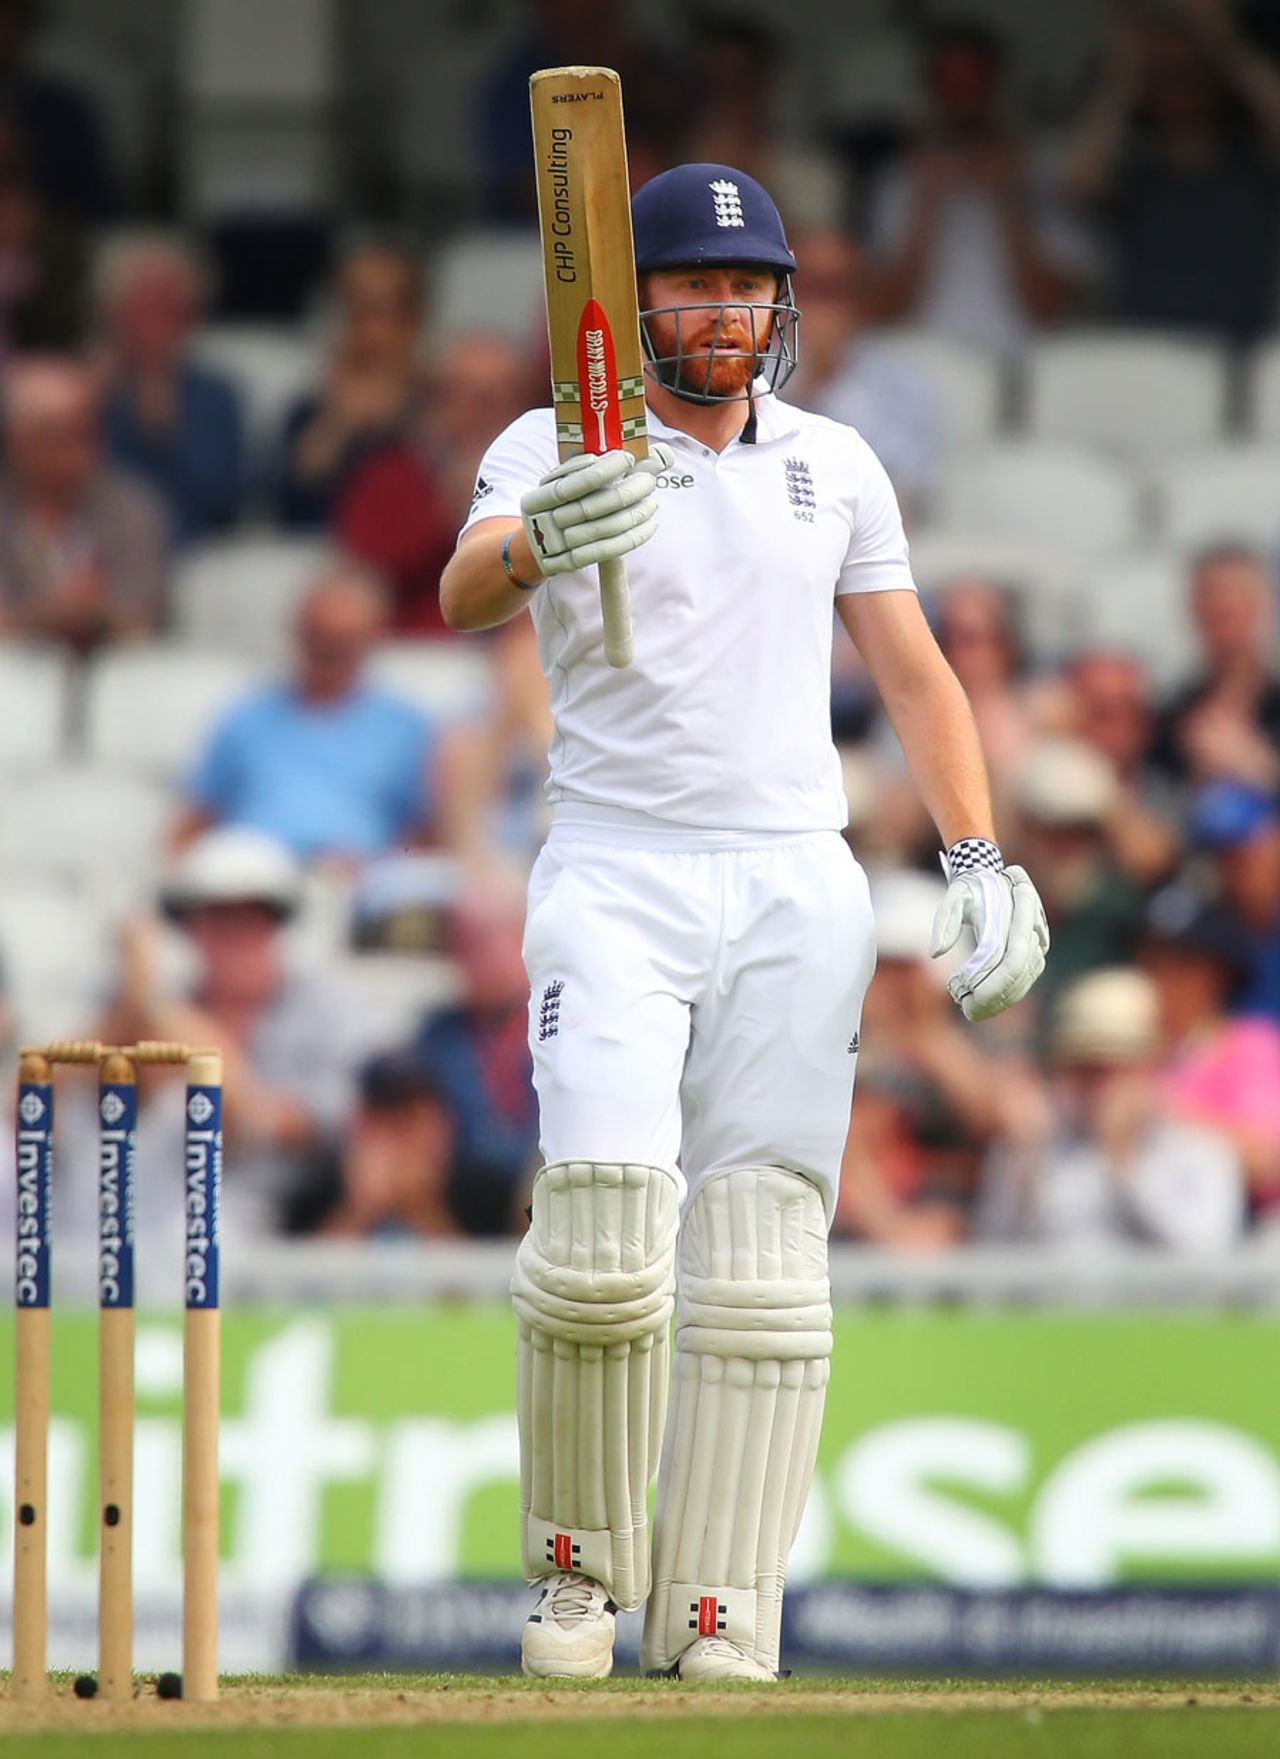 Jonny Bairstow hit a vigorous half-century, England v Pakistan, 4th Test, The Oval, 1st day, August 11, 2016